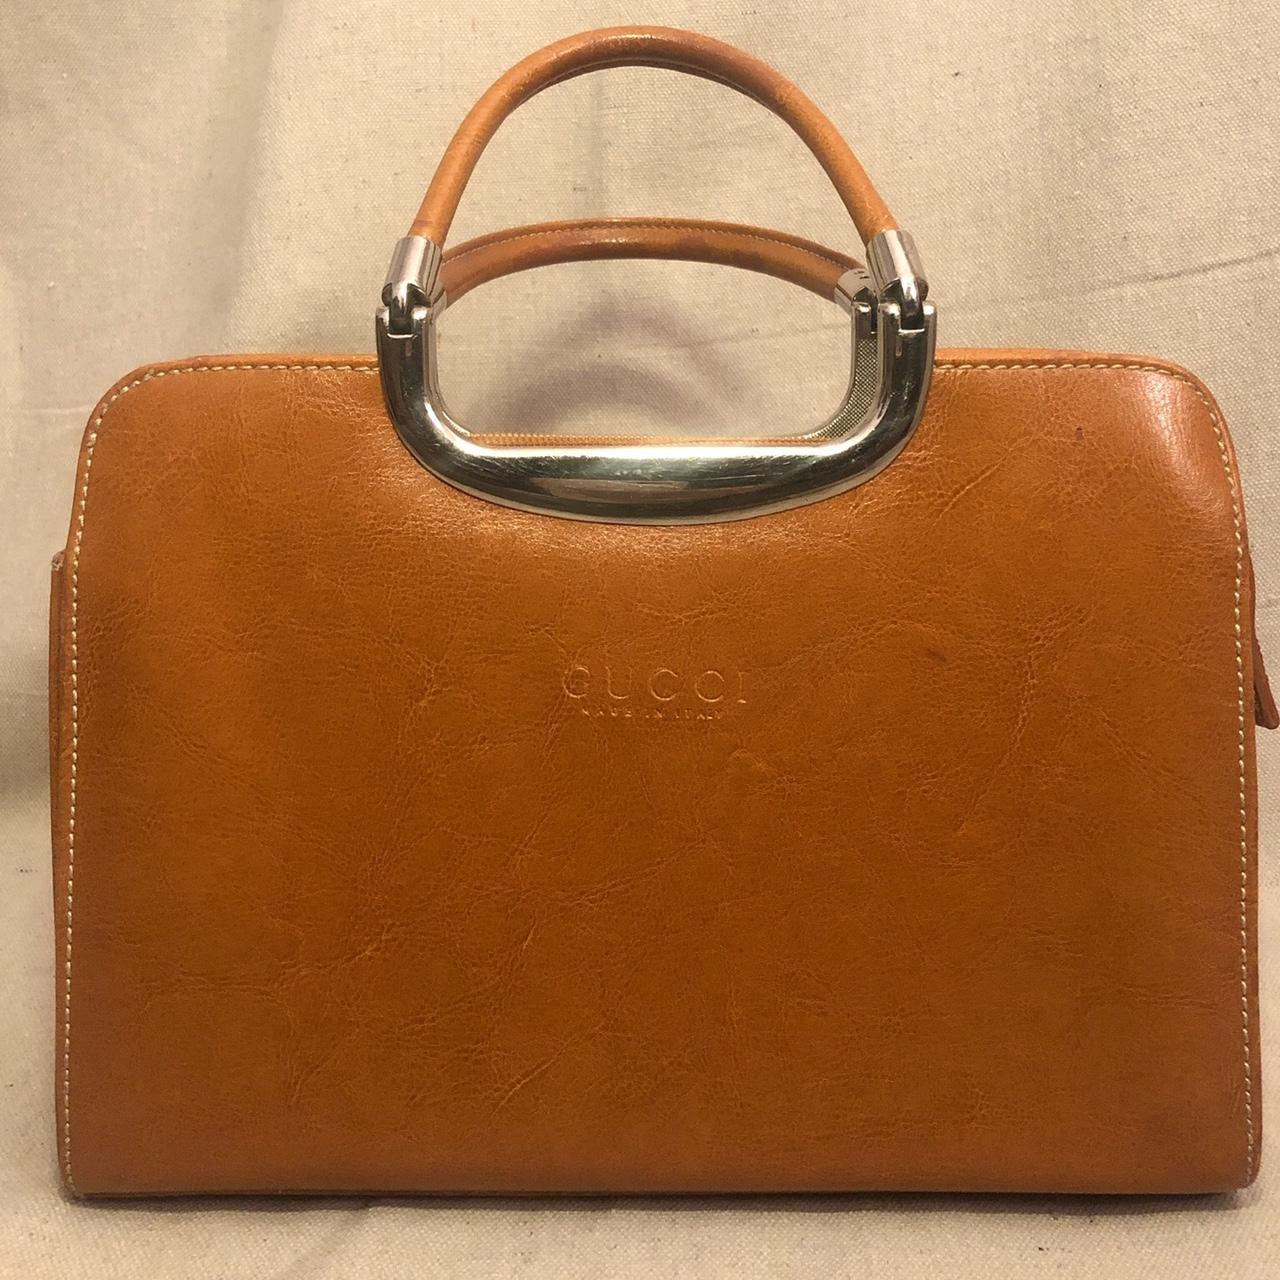 Gucci Women's Orange Bag